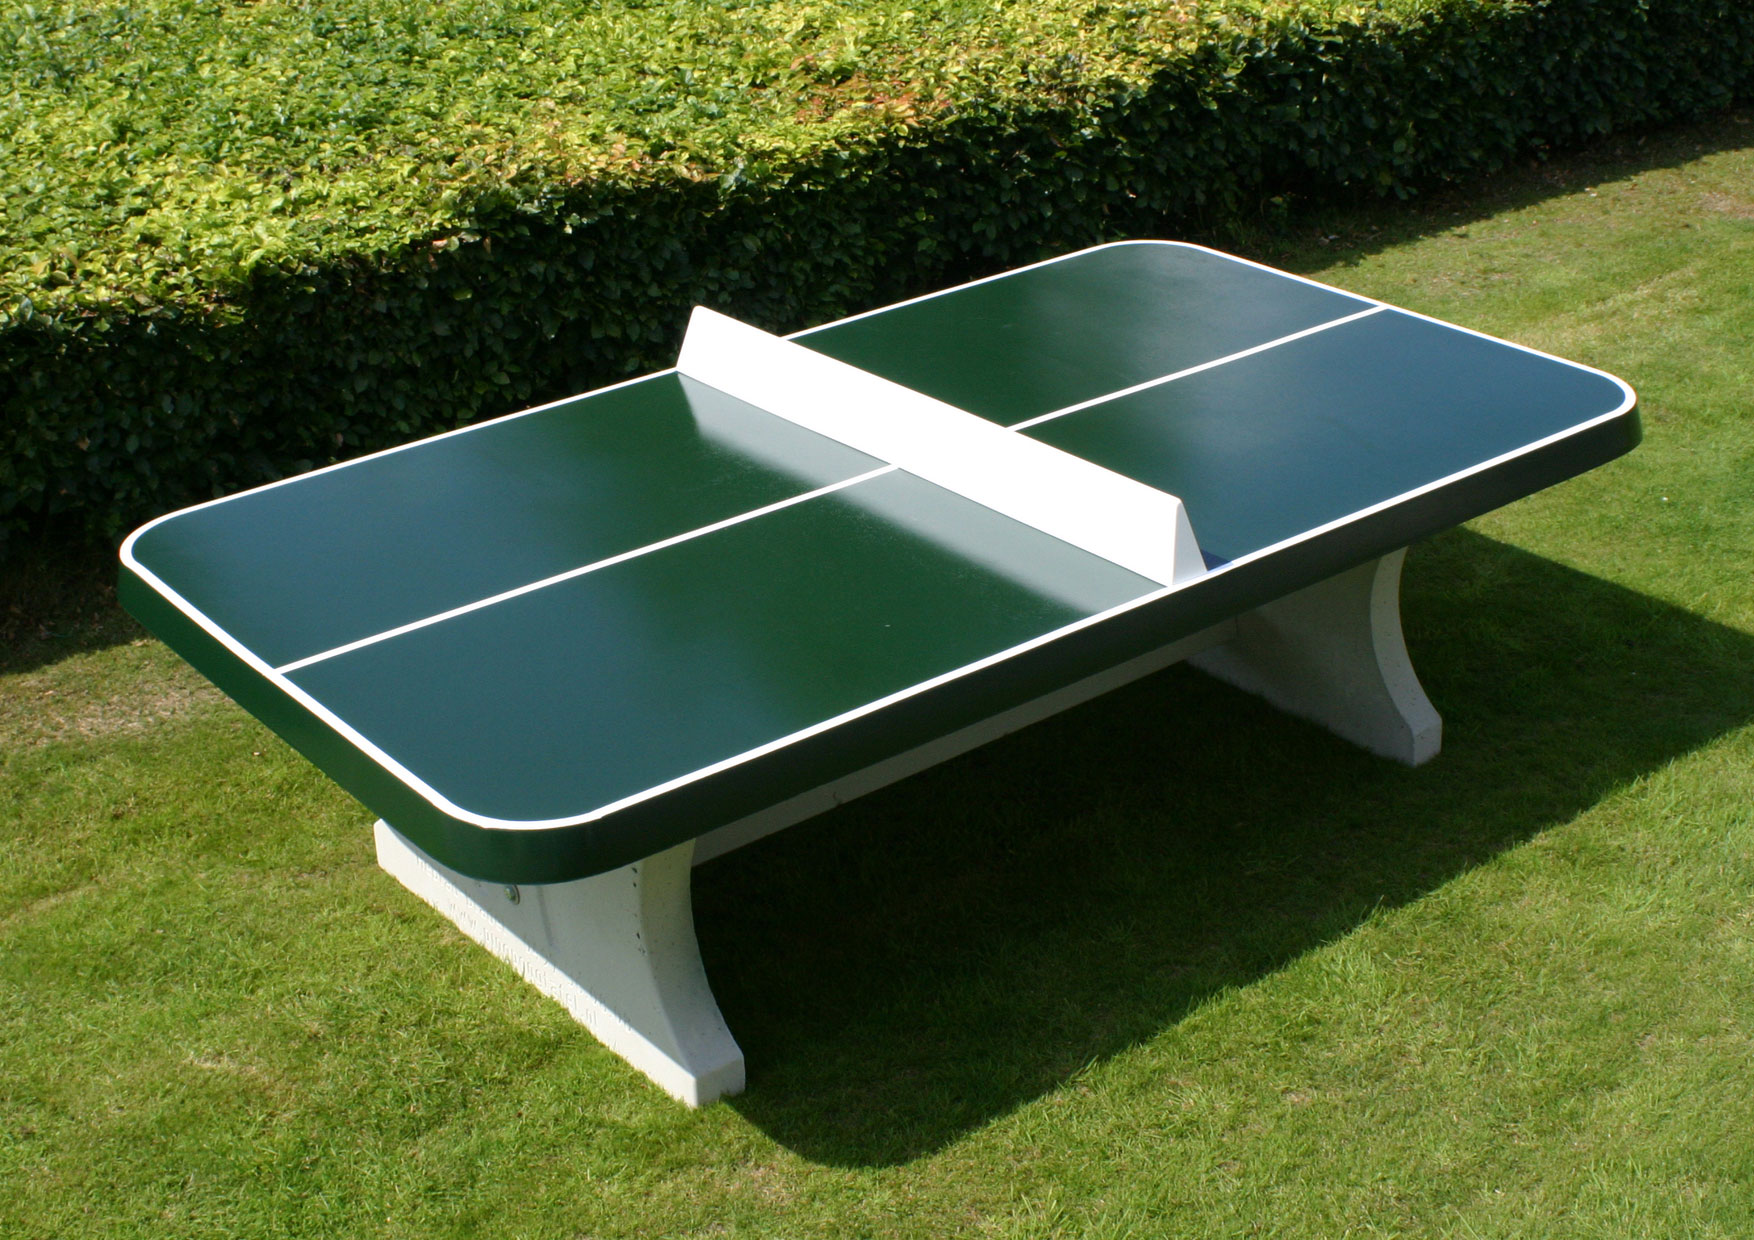 Concrete Ping-pong table green - HeBlad